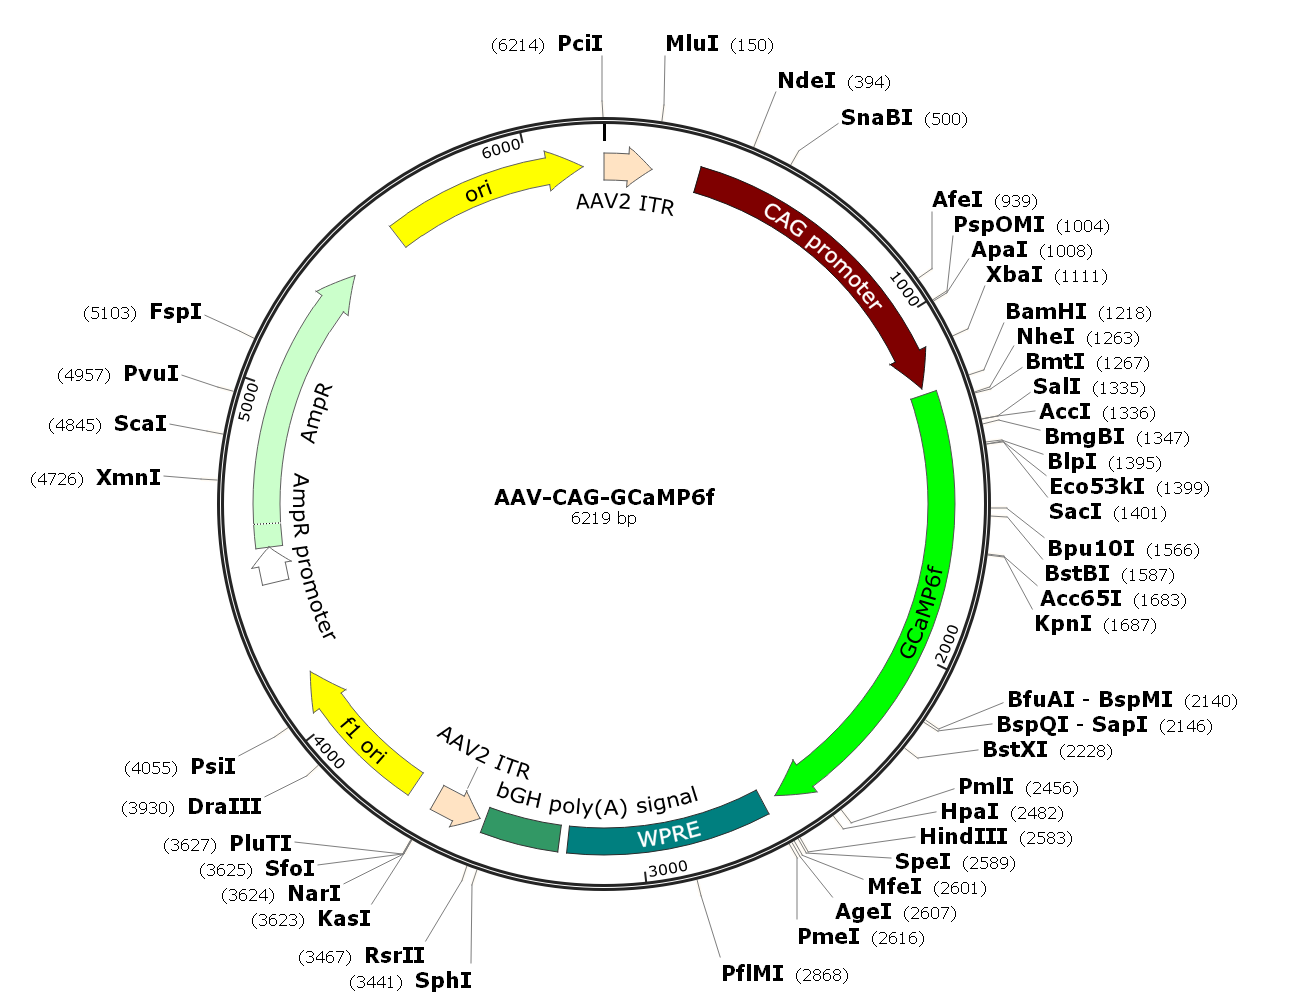 Pre-made recombinant AAV; AAV-CAG-GCaMP6f; AAV-CBA-GCaMP6f; AAV5-CAG-GCaMP6f; AAV5-CBA-GCaMP6f